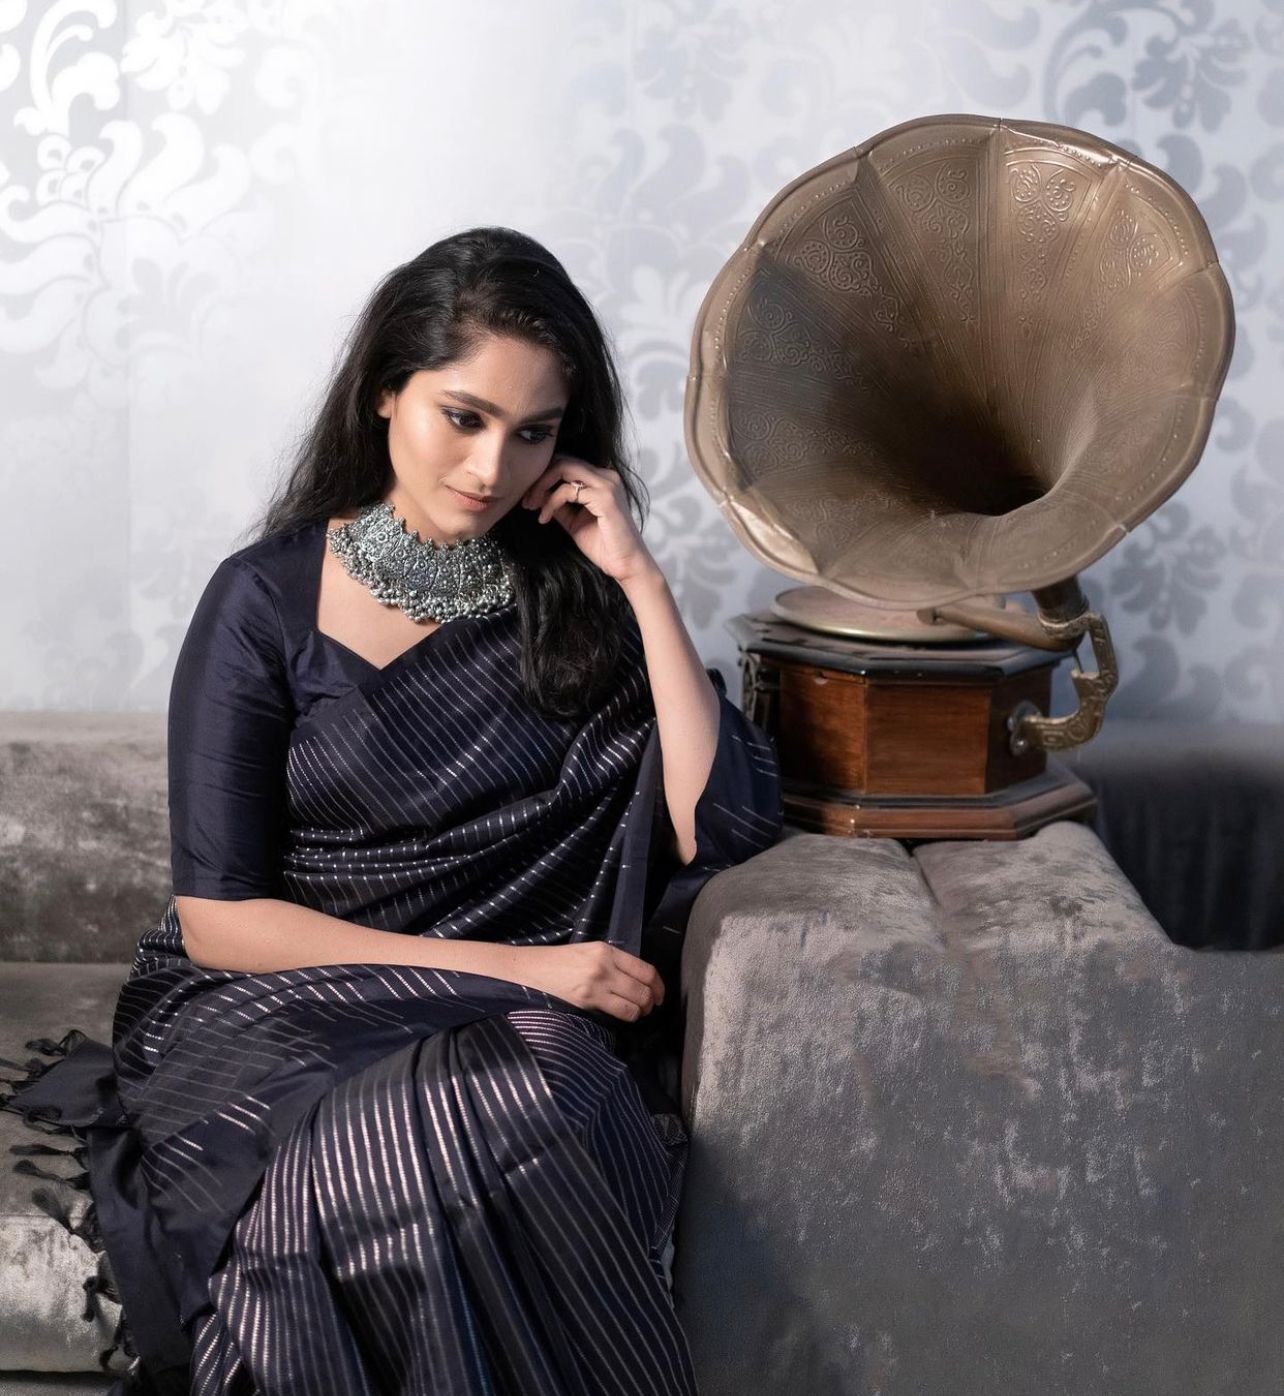 Stylish Black Soft Silk Saree With Sensational Blouse Piece - Colorful Saree